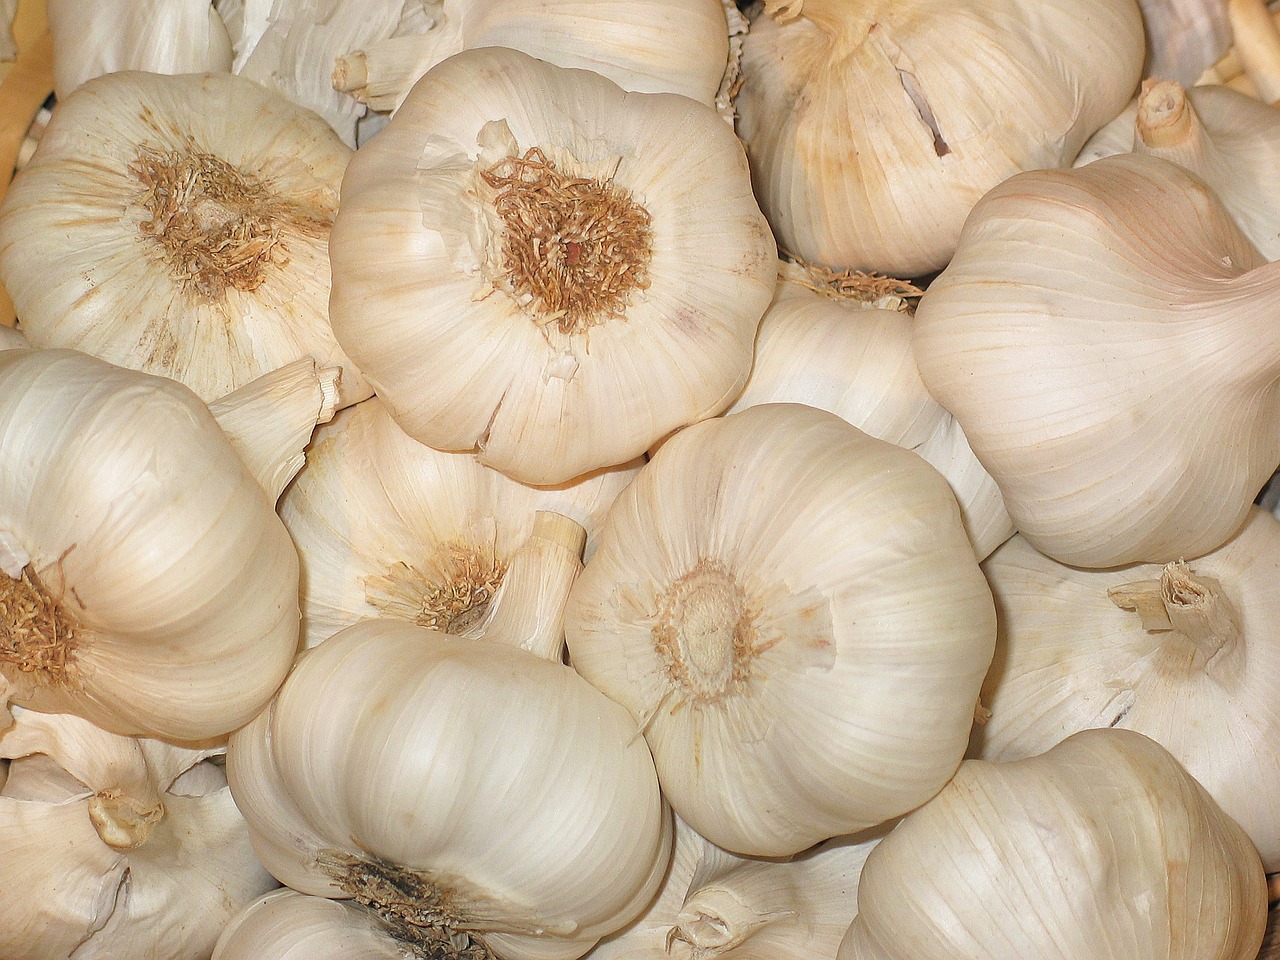 a pile of garlic sitting on top of a table, inspired by Carpoforo Tencalla, pixabay, hurufiyya, boissb - blanca. j, 3 2 x 3 2, detailed zoom photo, albino dwarf